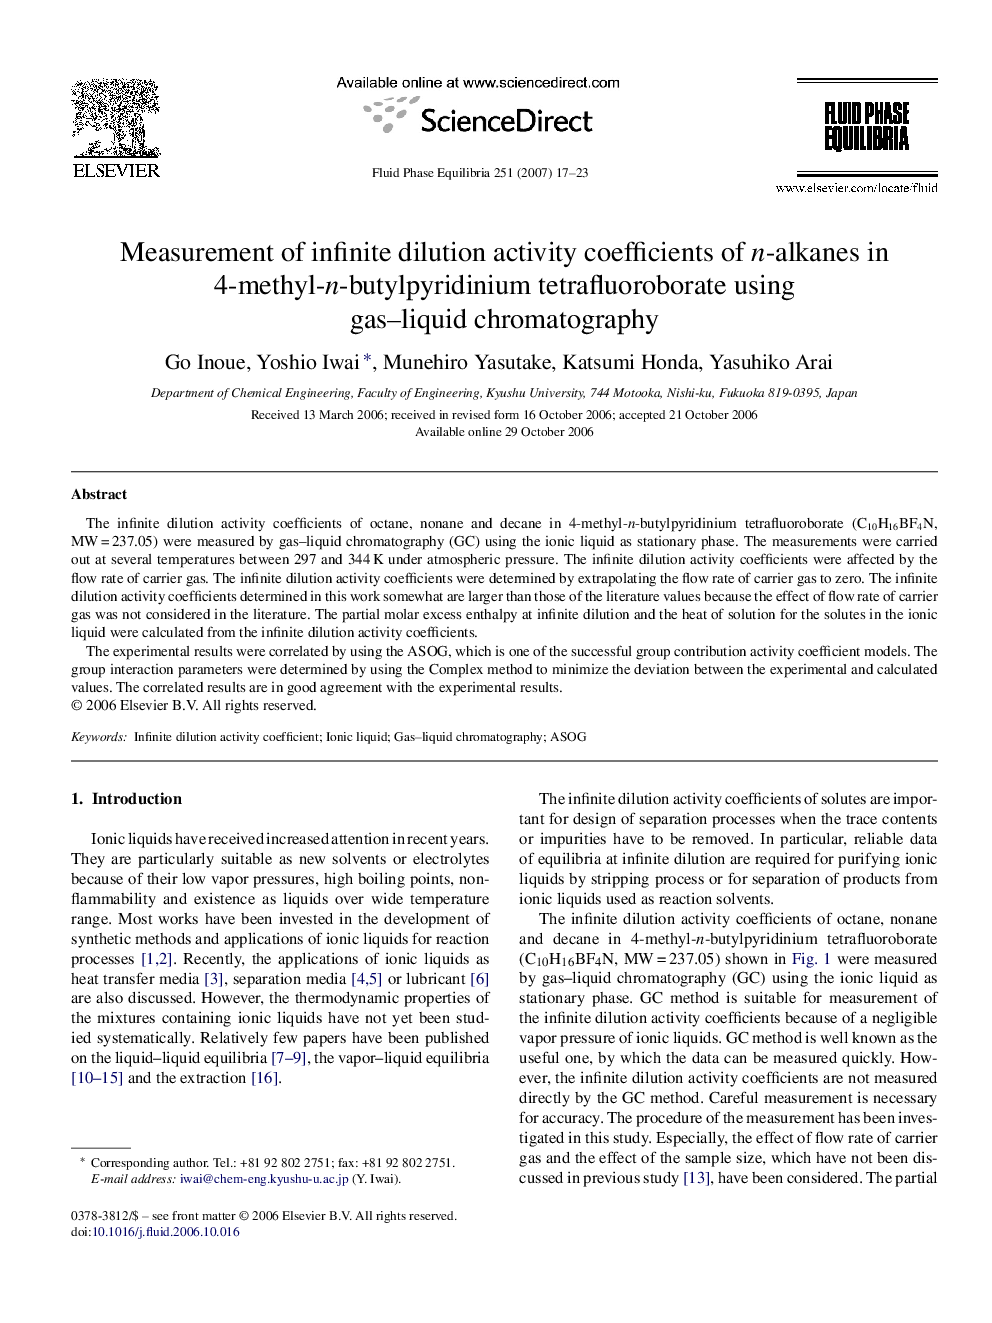 Measurement of infinite dilution activity coefficients of n-alkanes in 4-methyl-n-butylpyridinium tetrafluoroborate using gas–liquid chromatography